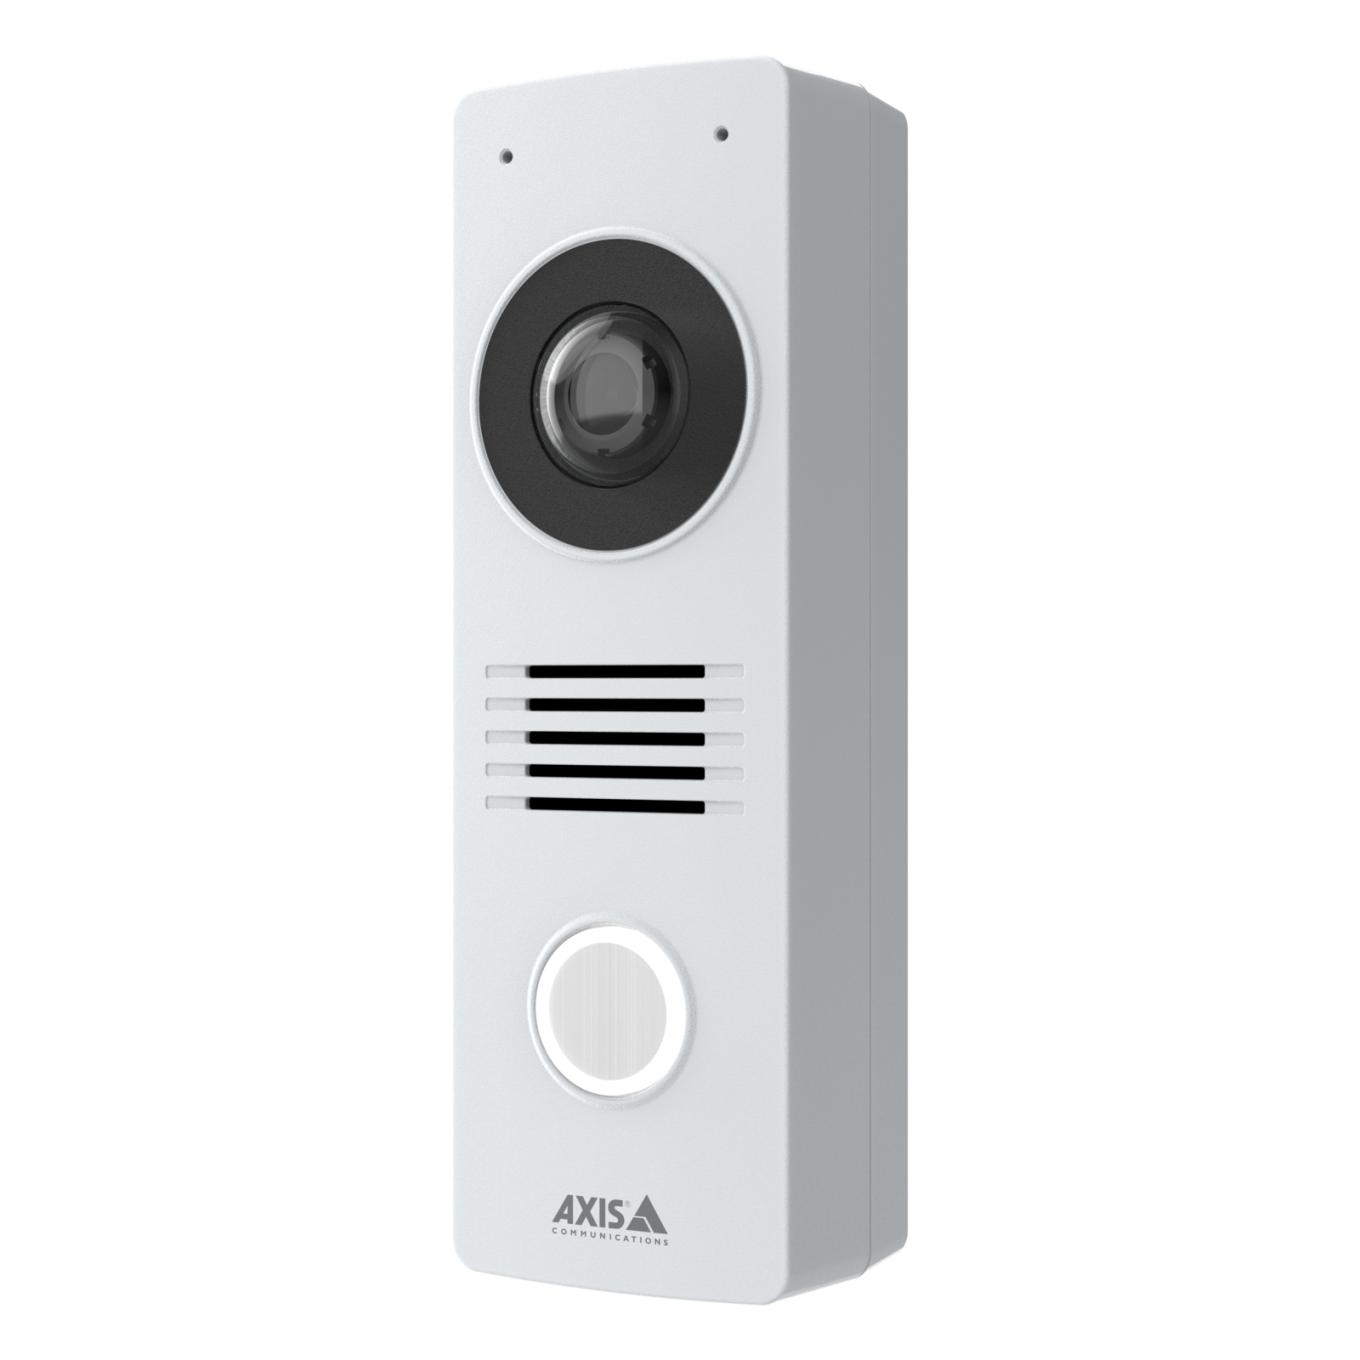 AXIS I8116-E Network Video Intercom | Axis Communications